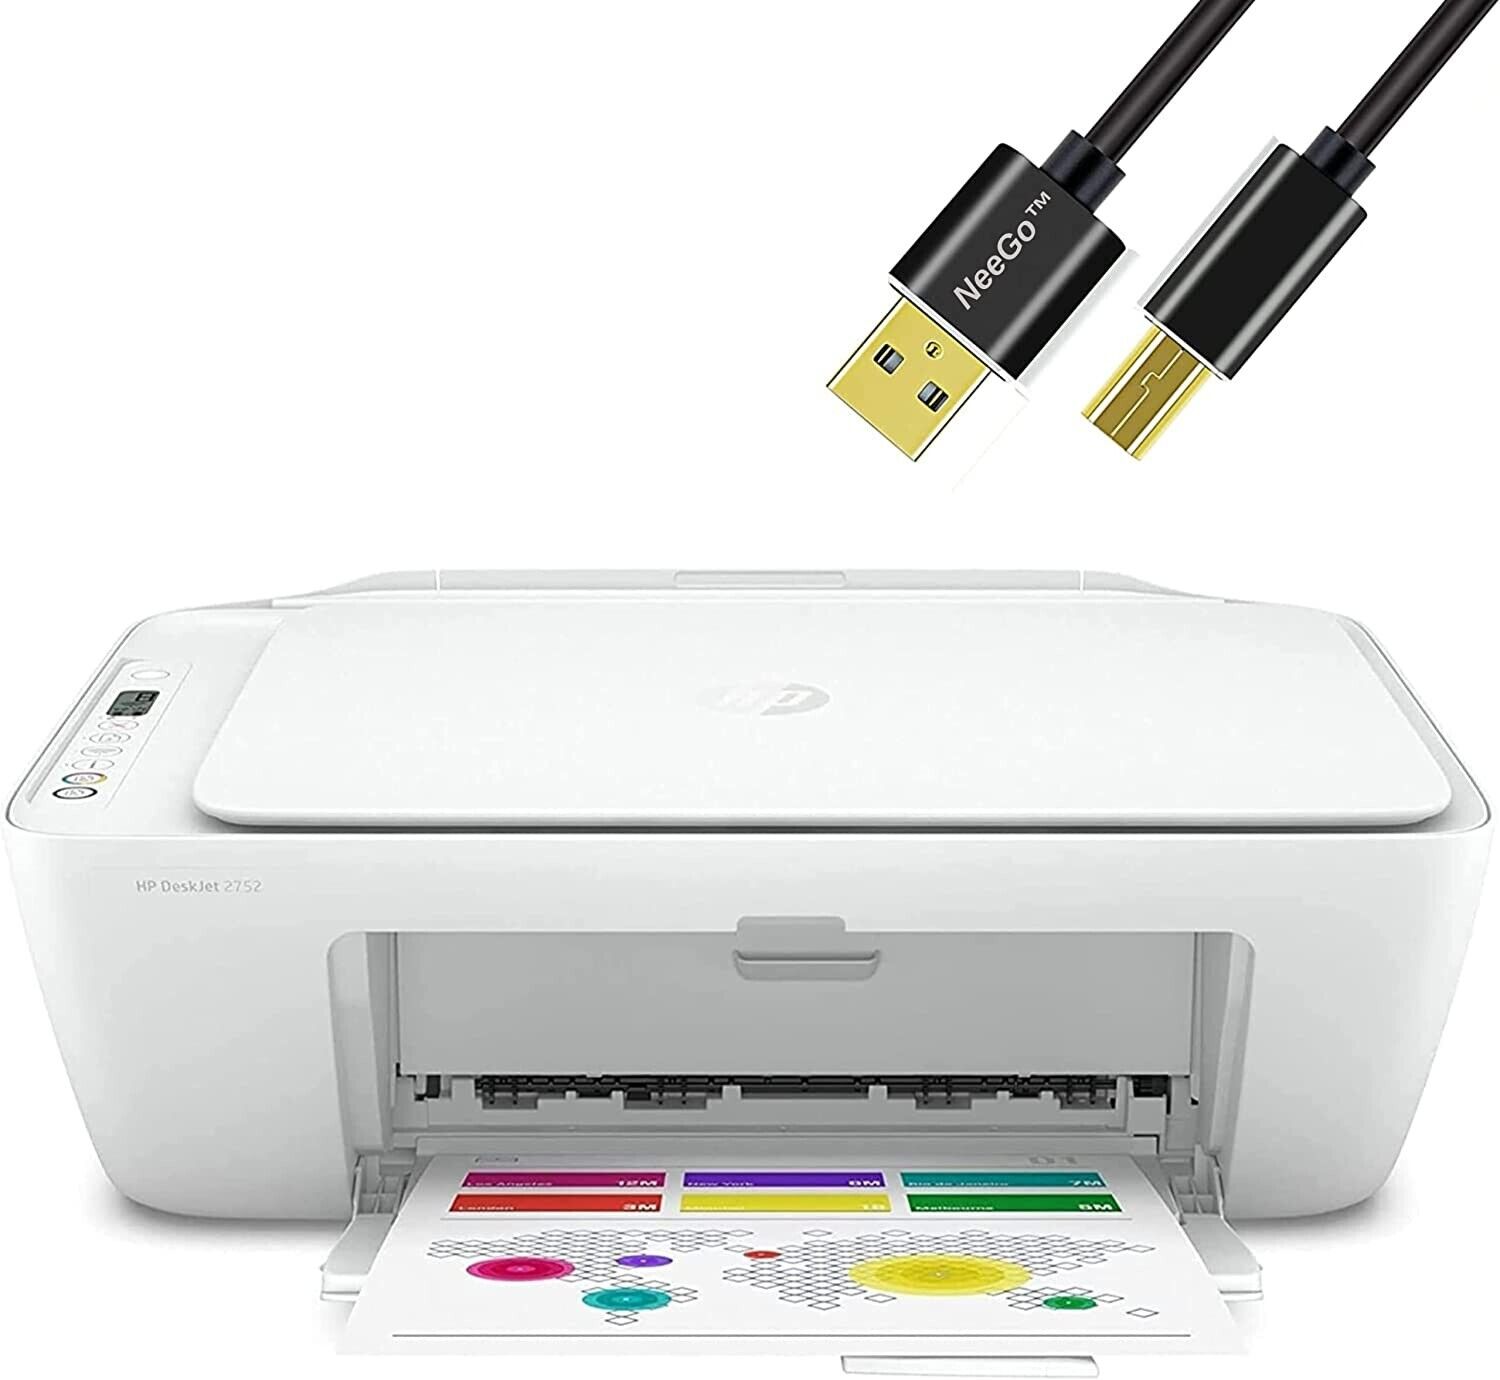 NEEGO HP Wireless Printer. Print. Copy. Scan. USB. Mobile Printing